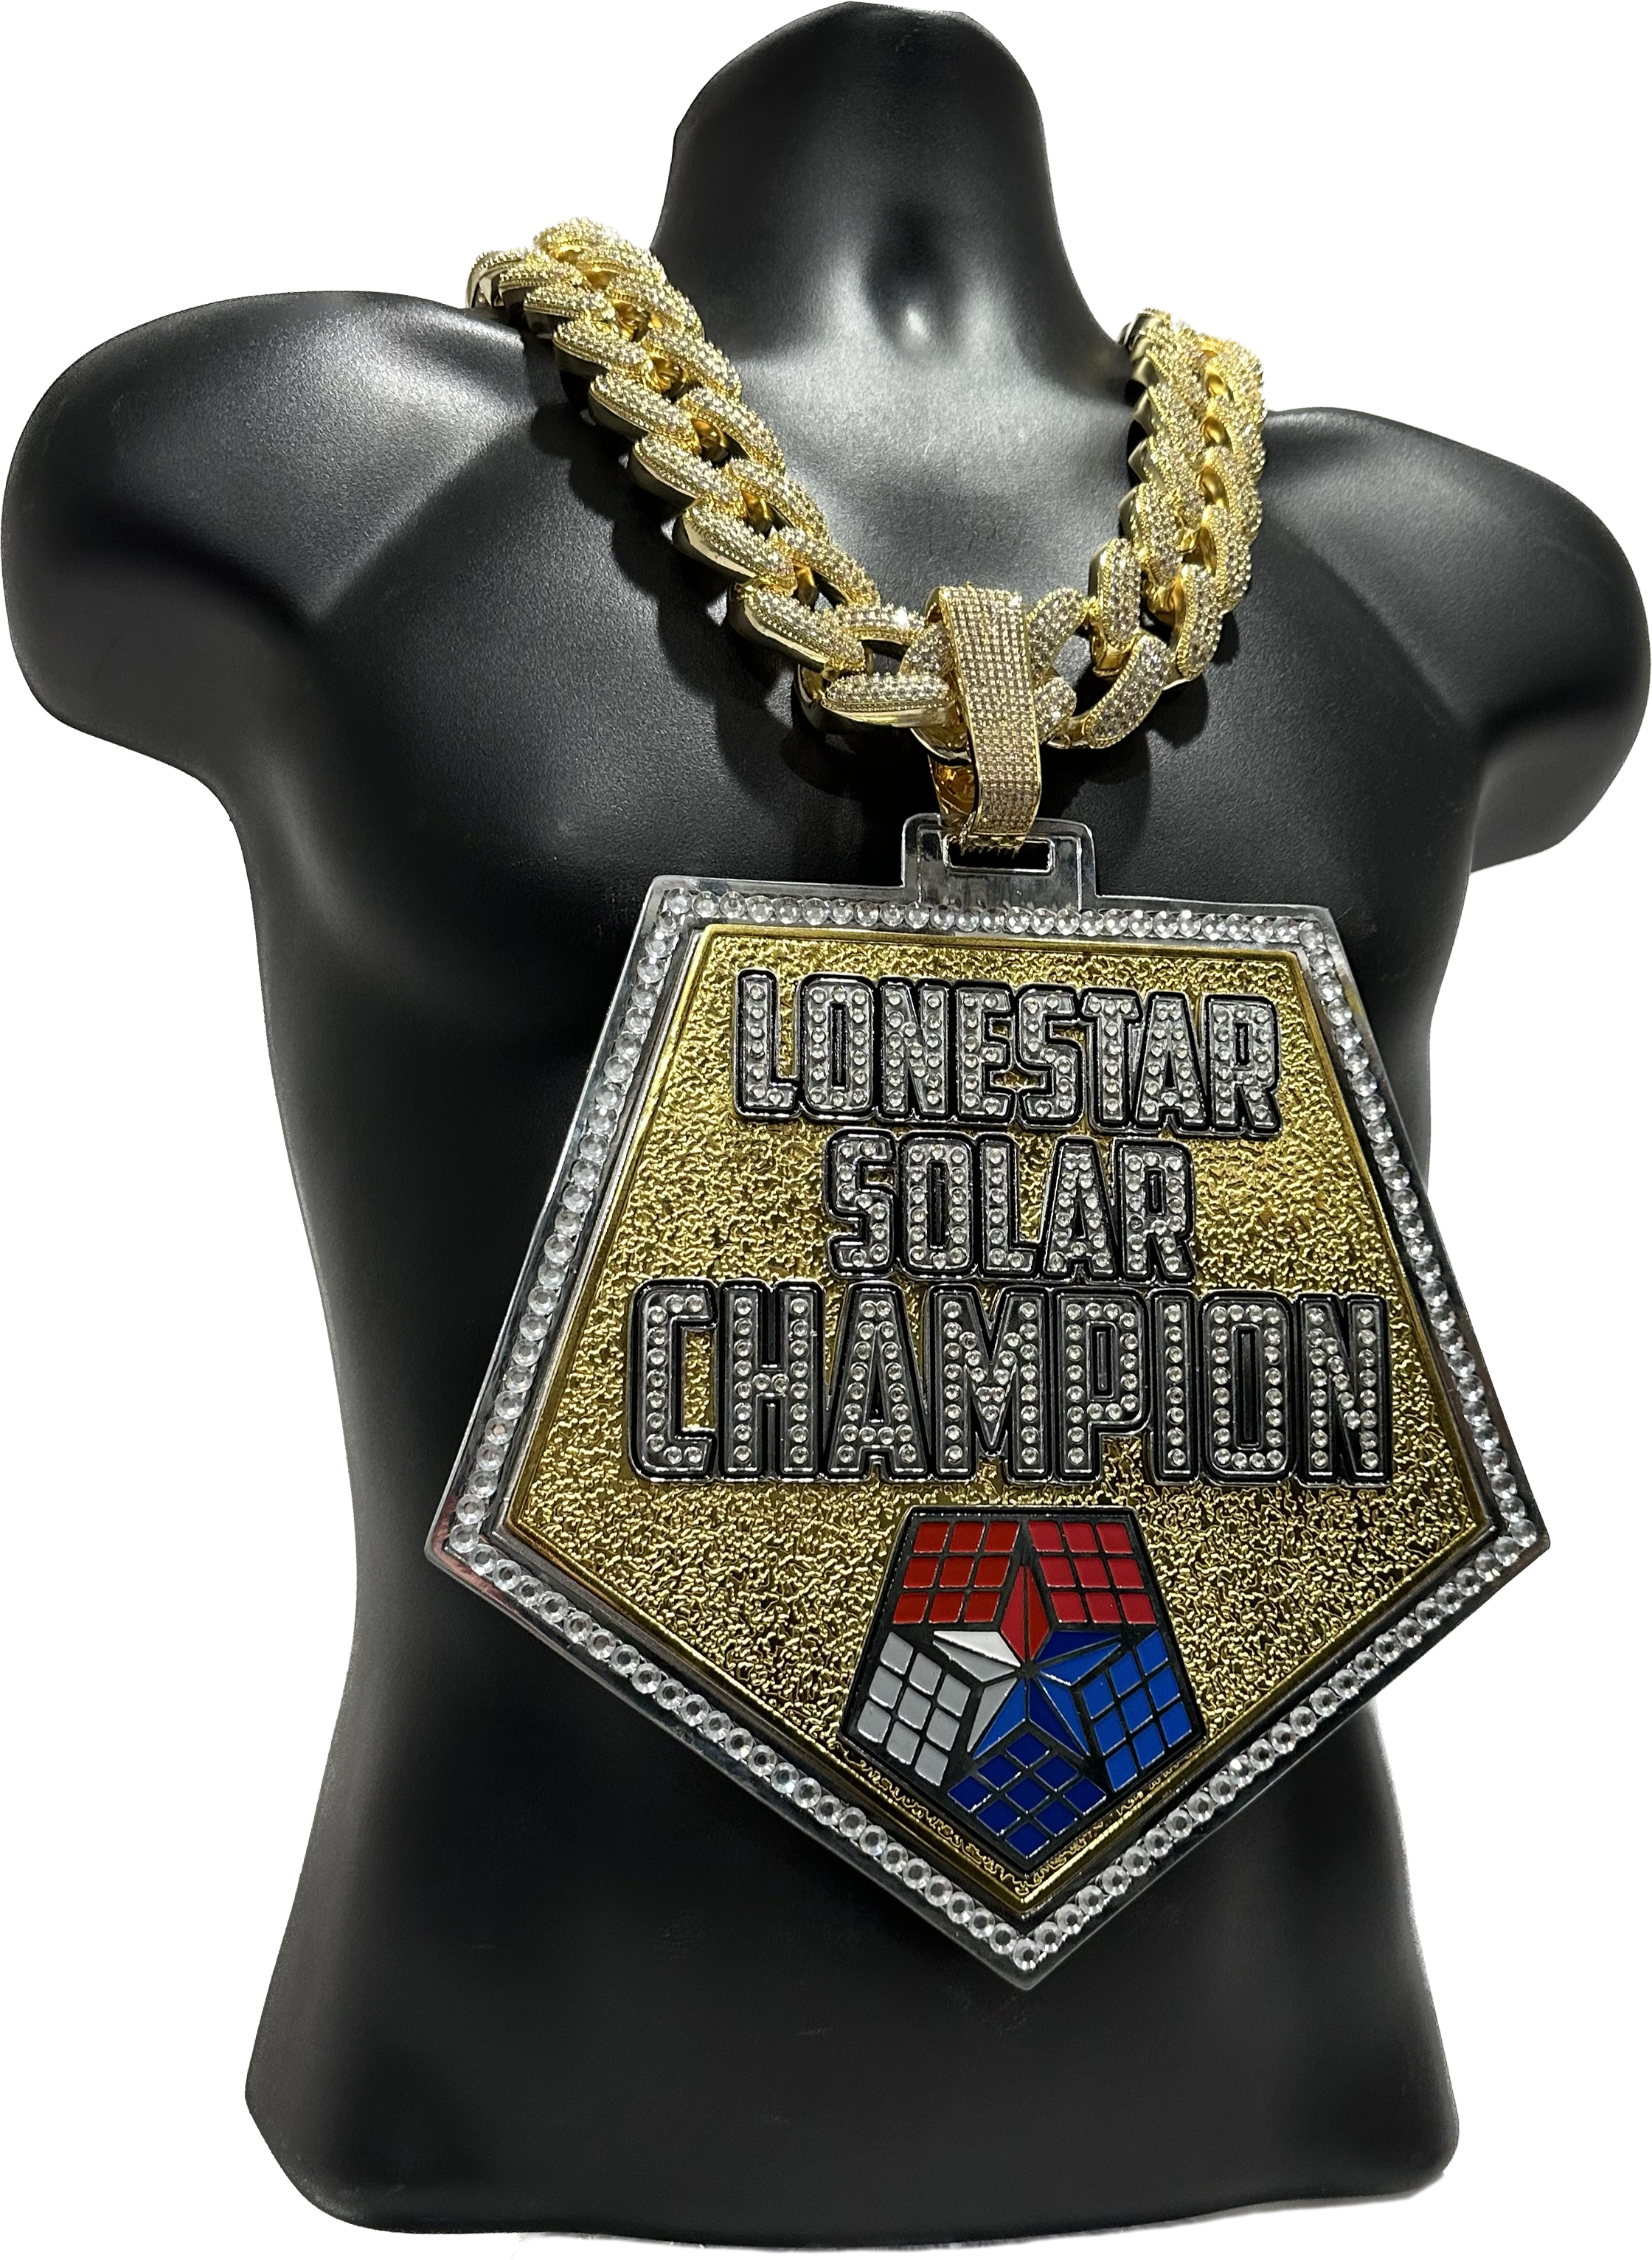 Lonestar Solar Champion Championship Chain Award